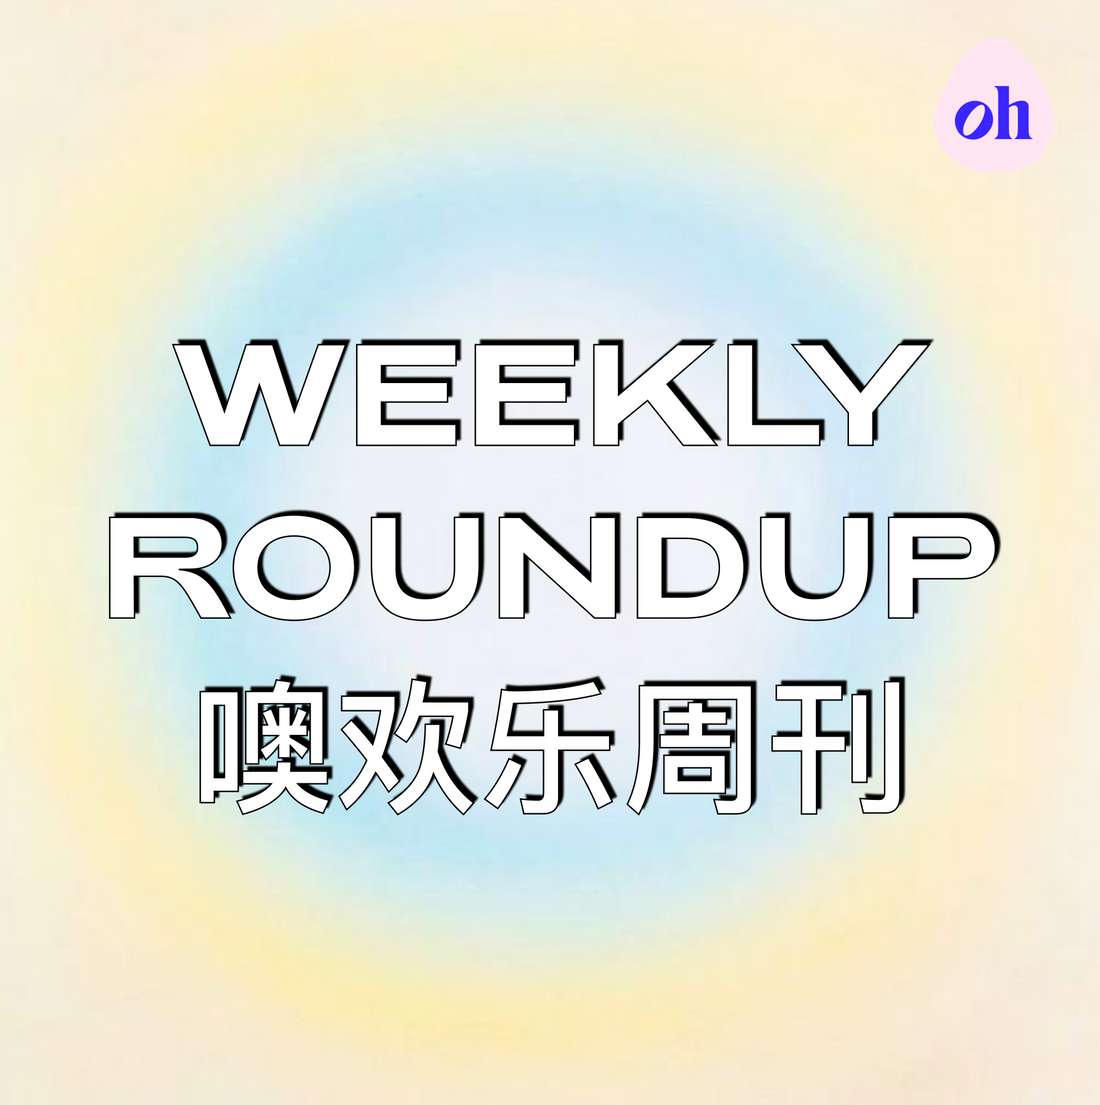 Weekly Roundup: Mental Health, Sex Drive & Challenge Of The Week